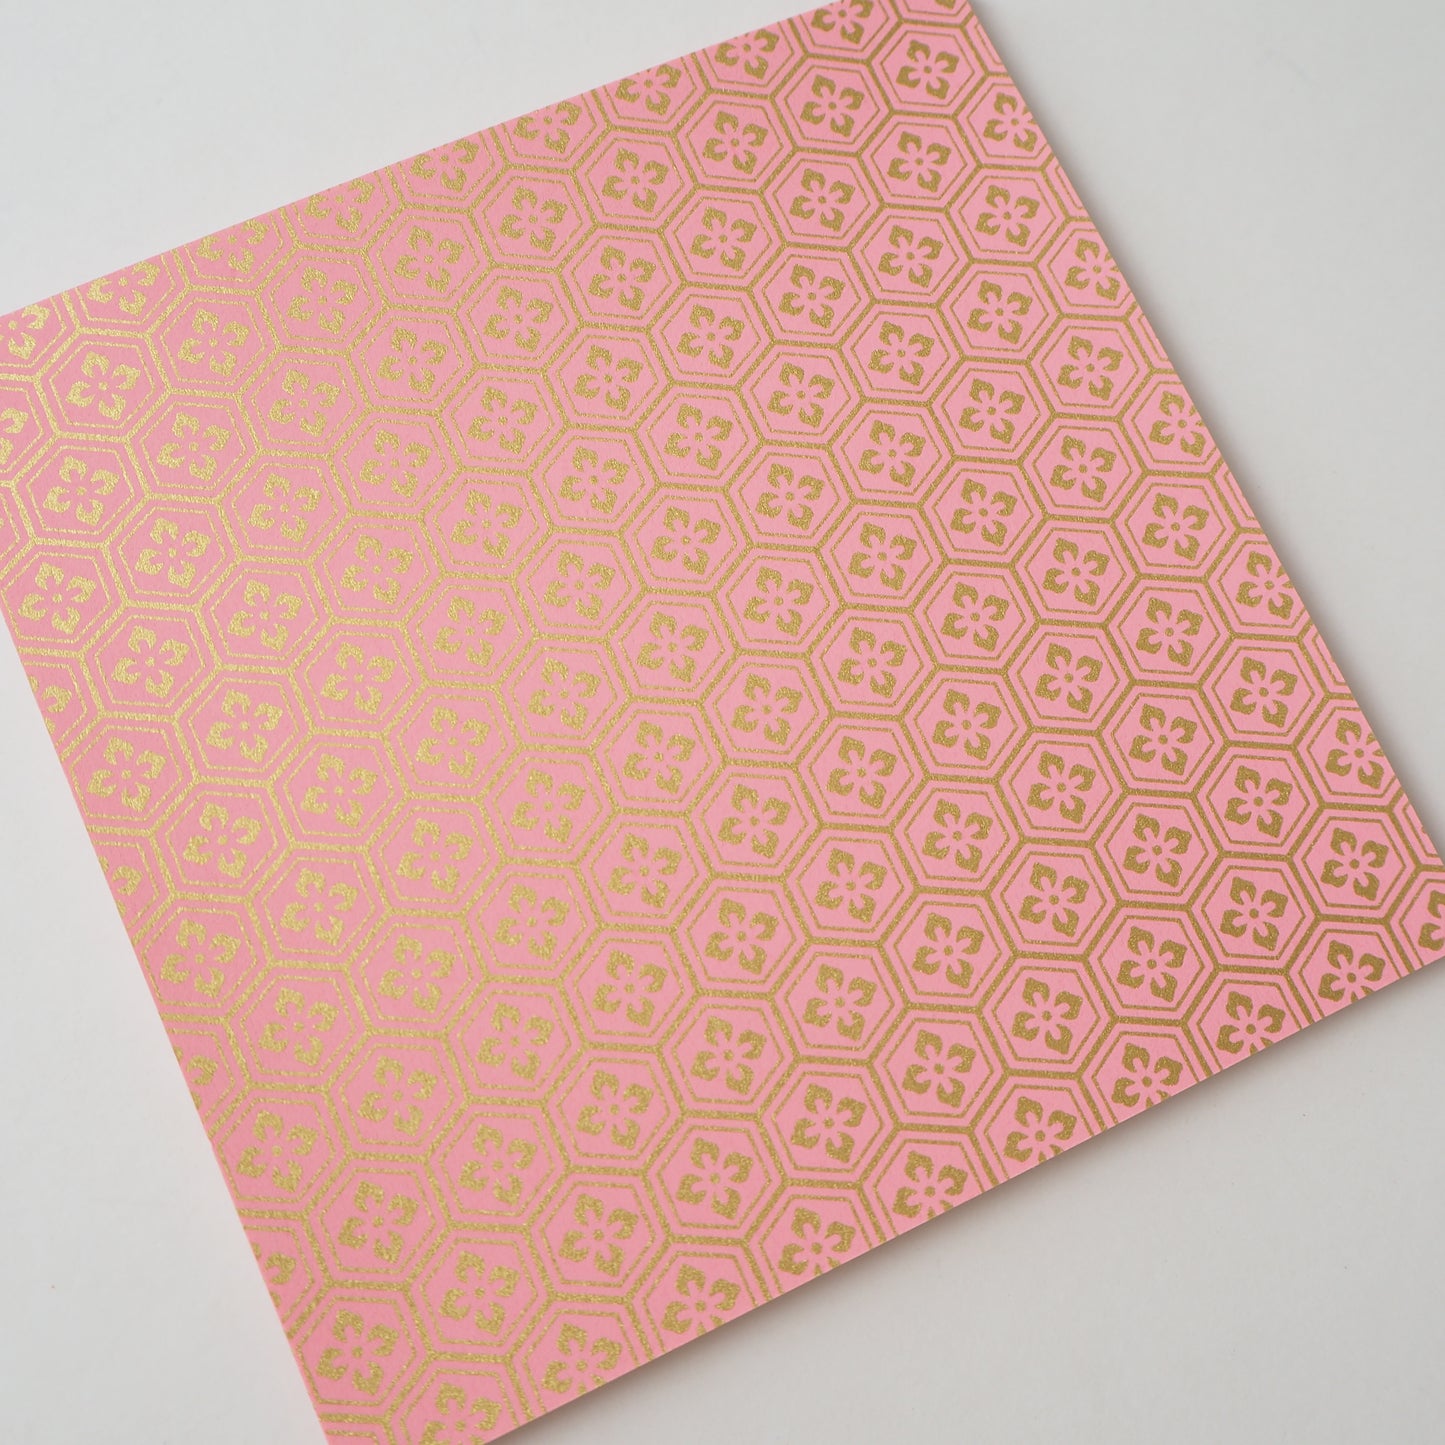 Pack of 20 Sheets 14x14cm Yuzen Washi Origami Paper HZ-343 - Pink Gold Tortoiseshell Diamond Flower